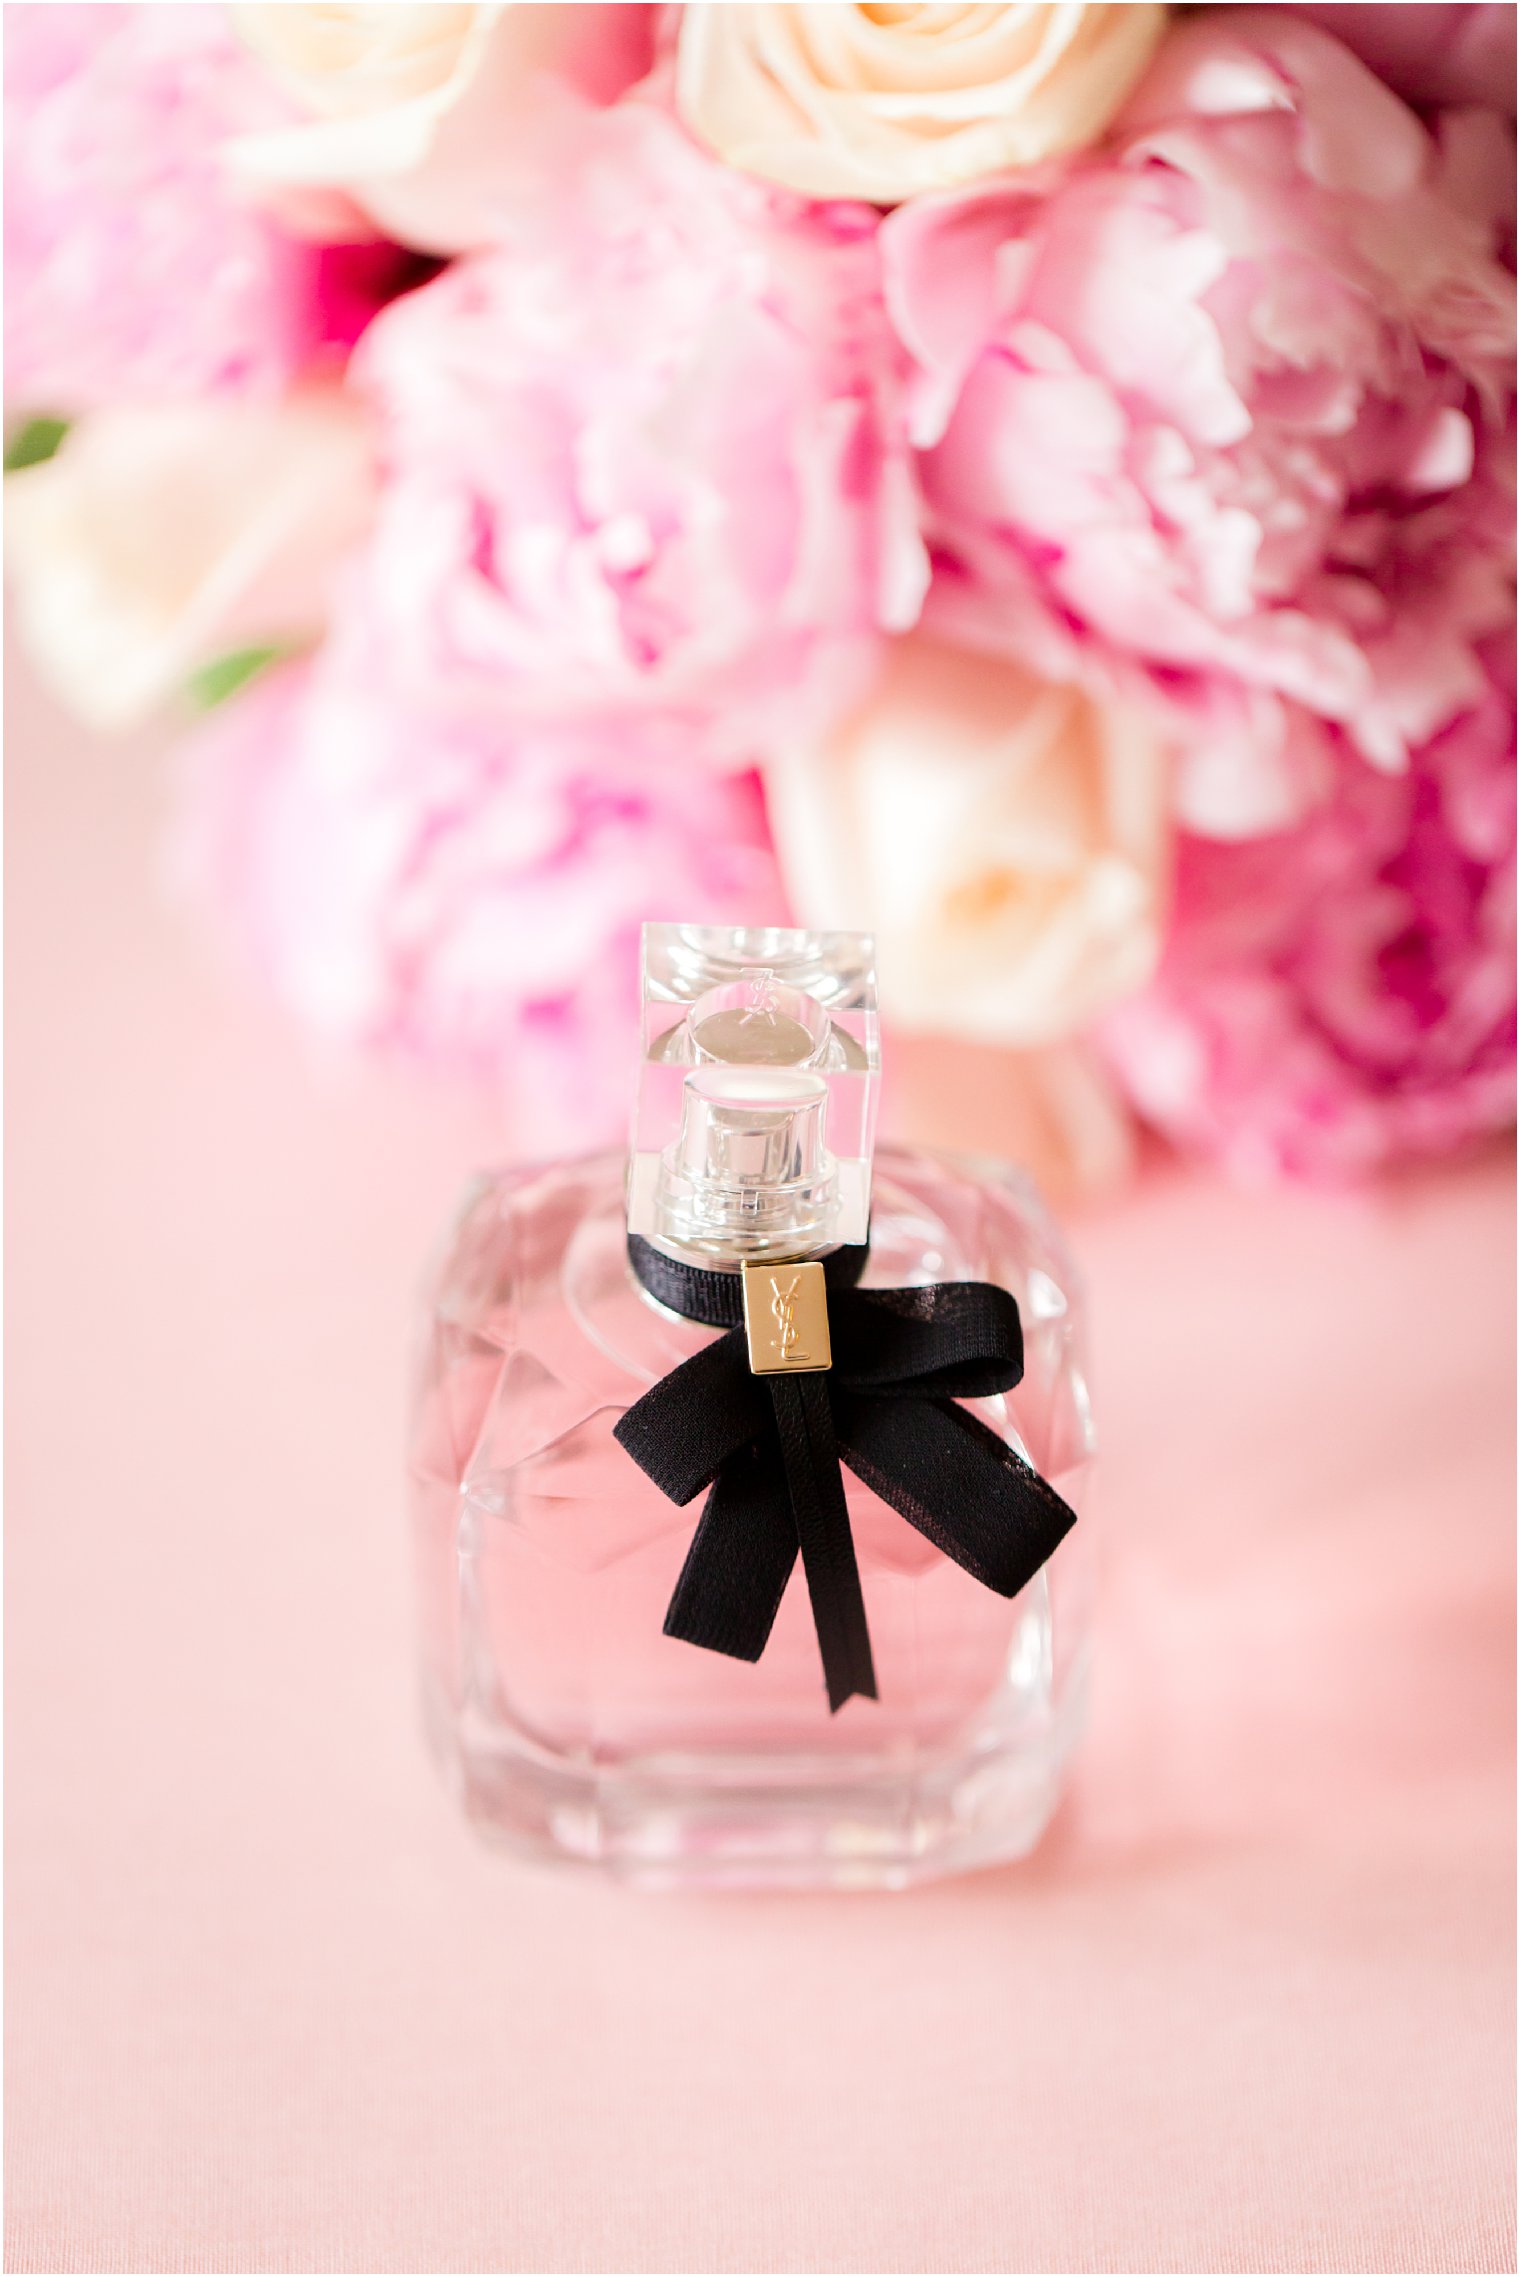 Yves Saint Laurent perfume gift for bride | Photo by Idalia Photography